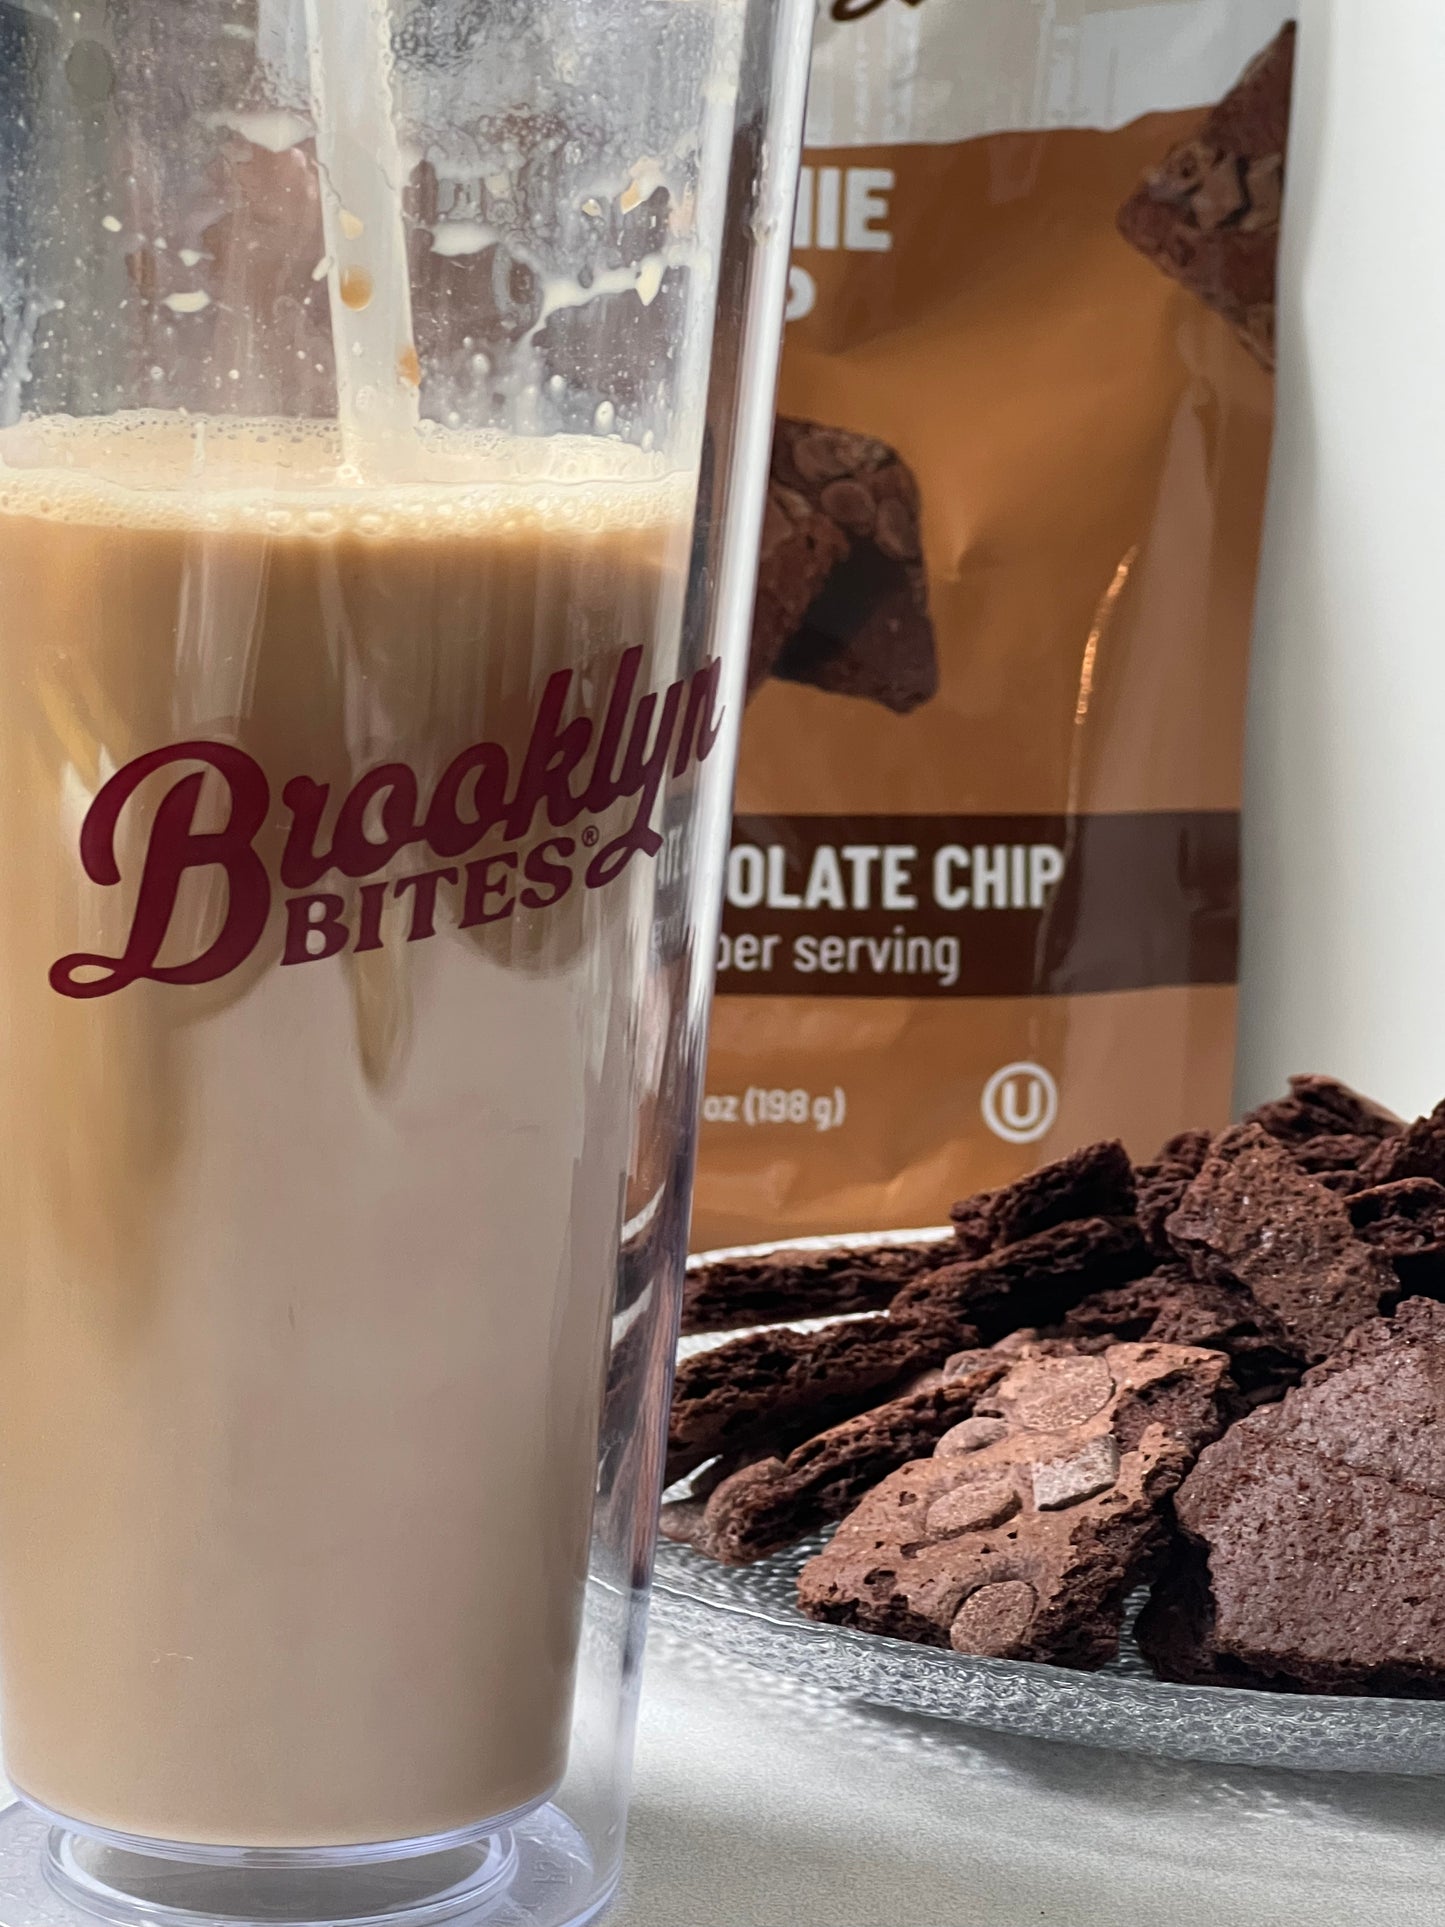 Brooklyn Bites Acrylic Coffee Tumbler